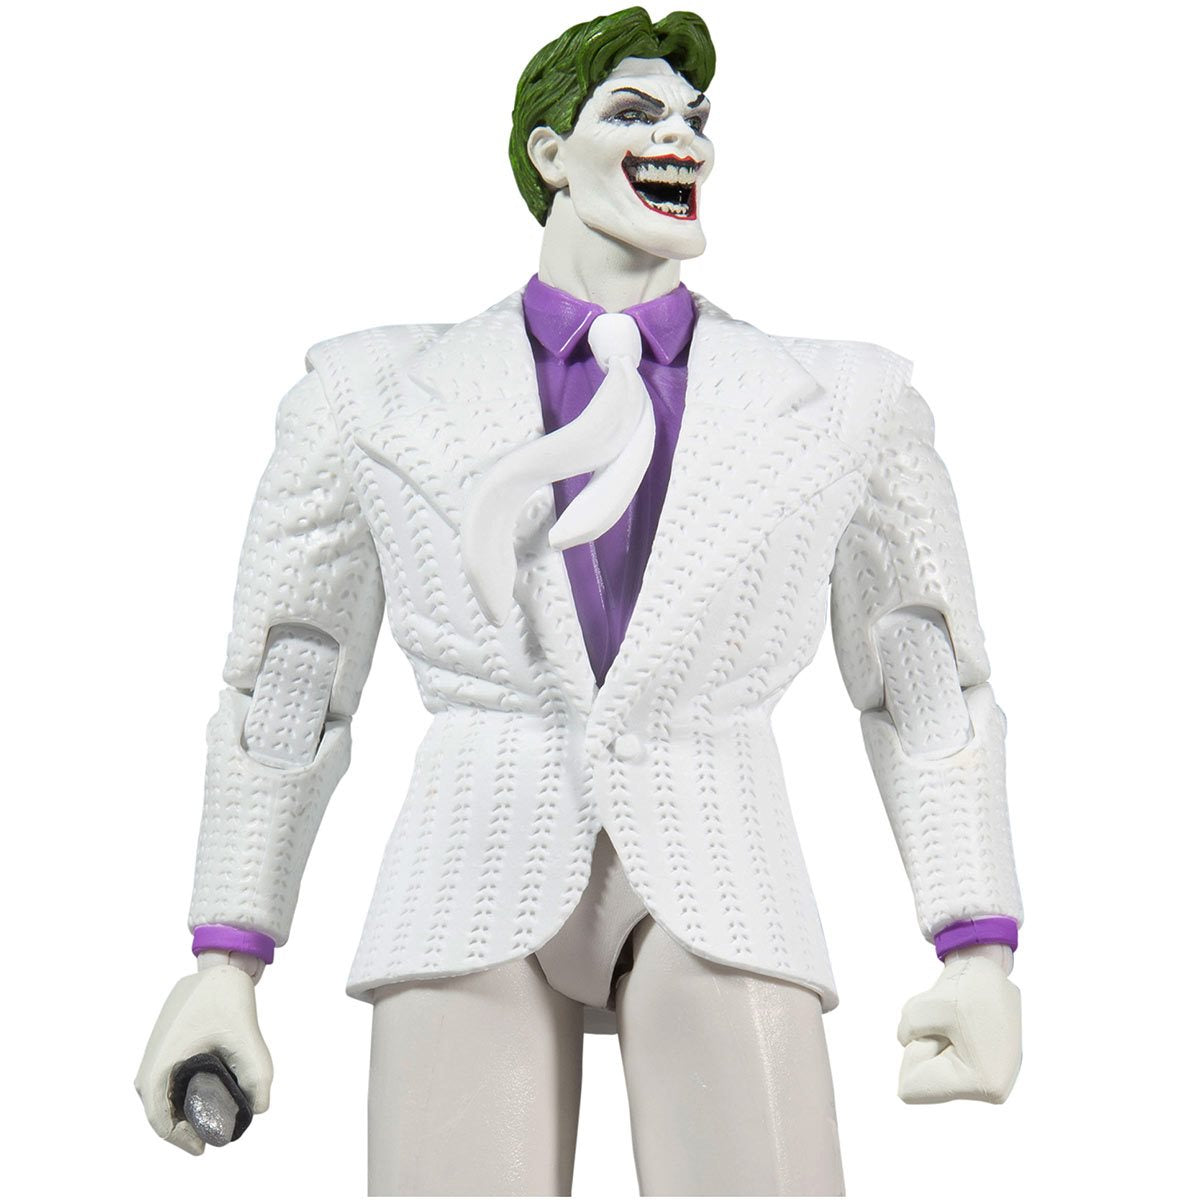 Joker Dark Knight Returns 7-Inch Scale Action Figure